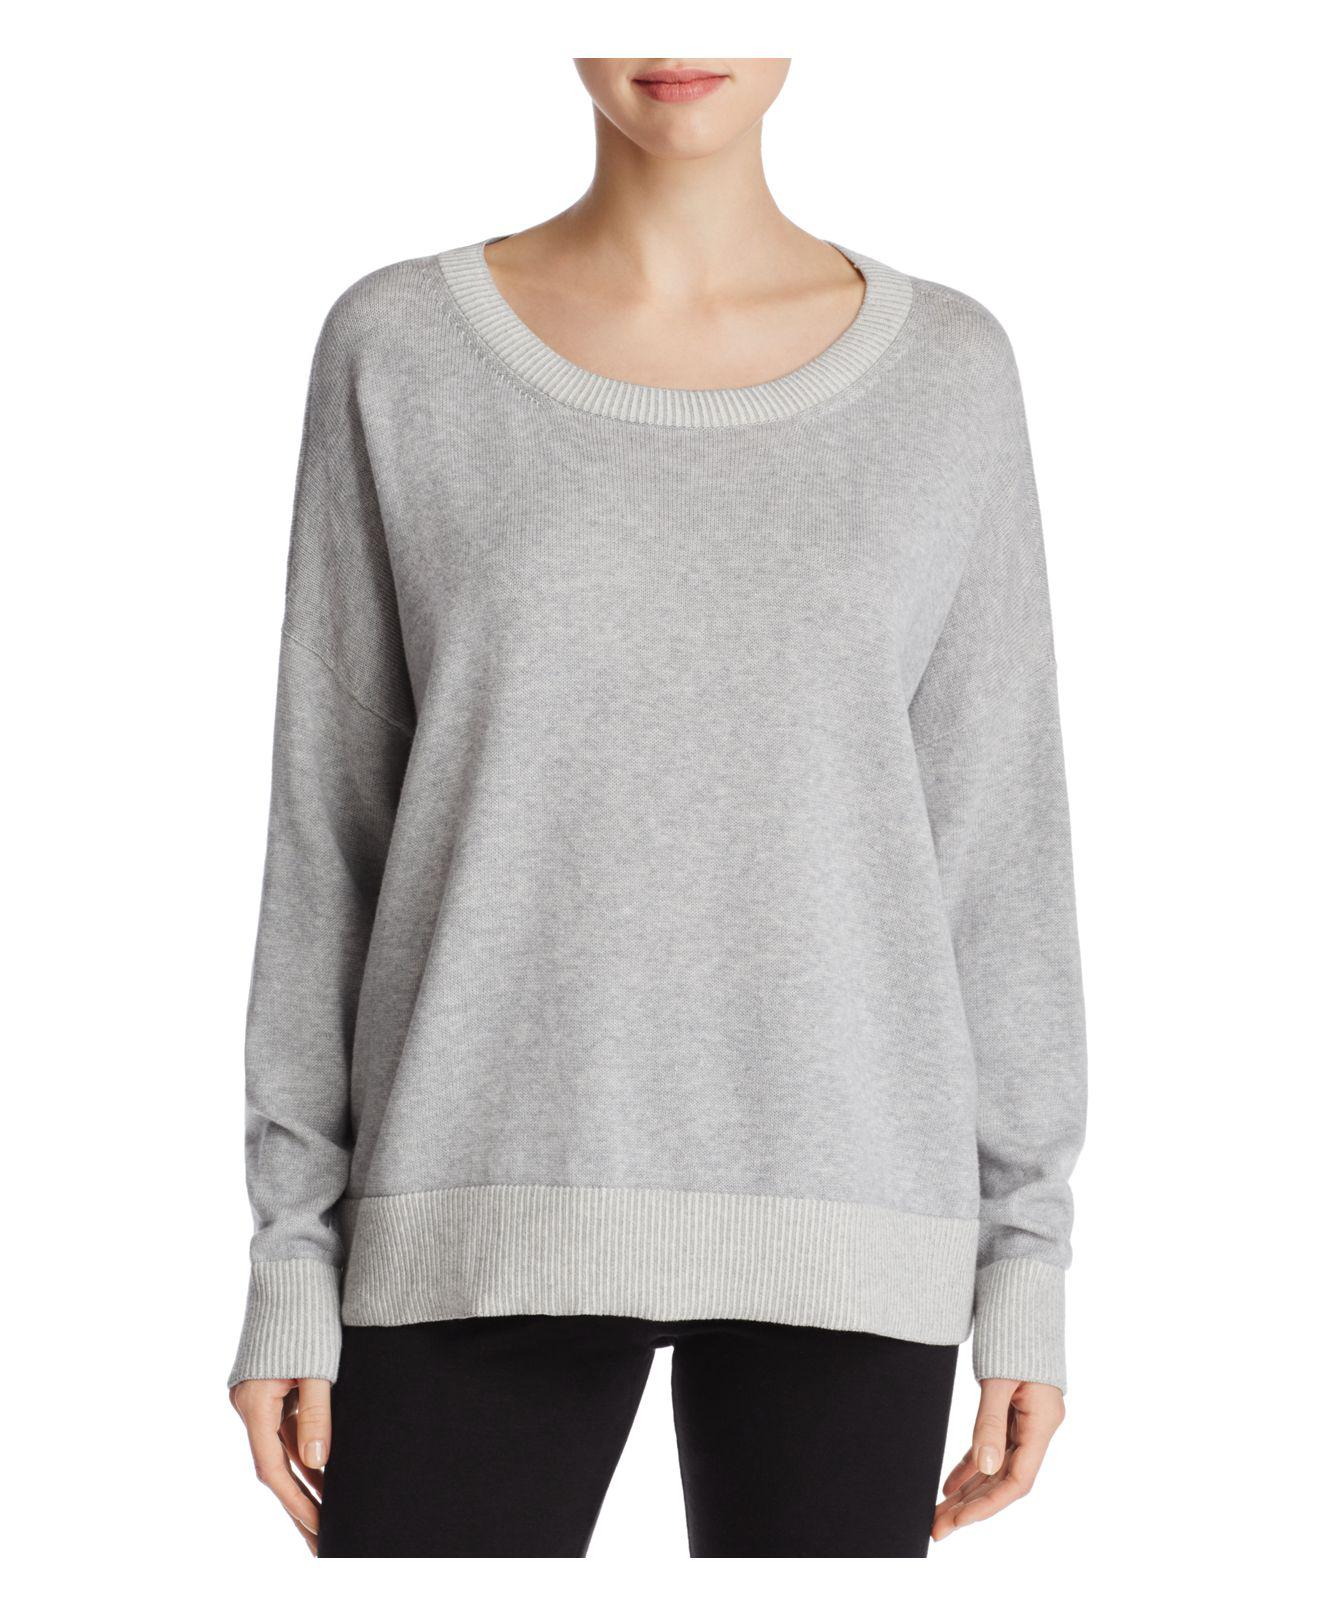 Lyst - Eileen Fisher Organic Cotton Drop Shoulder Sweater in Gray